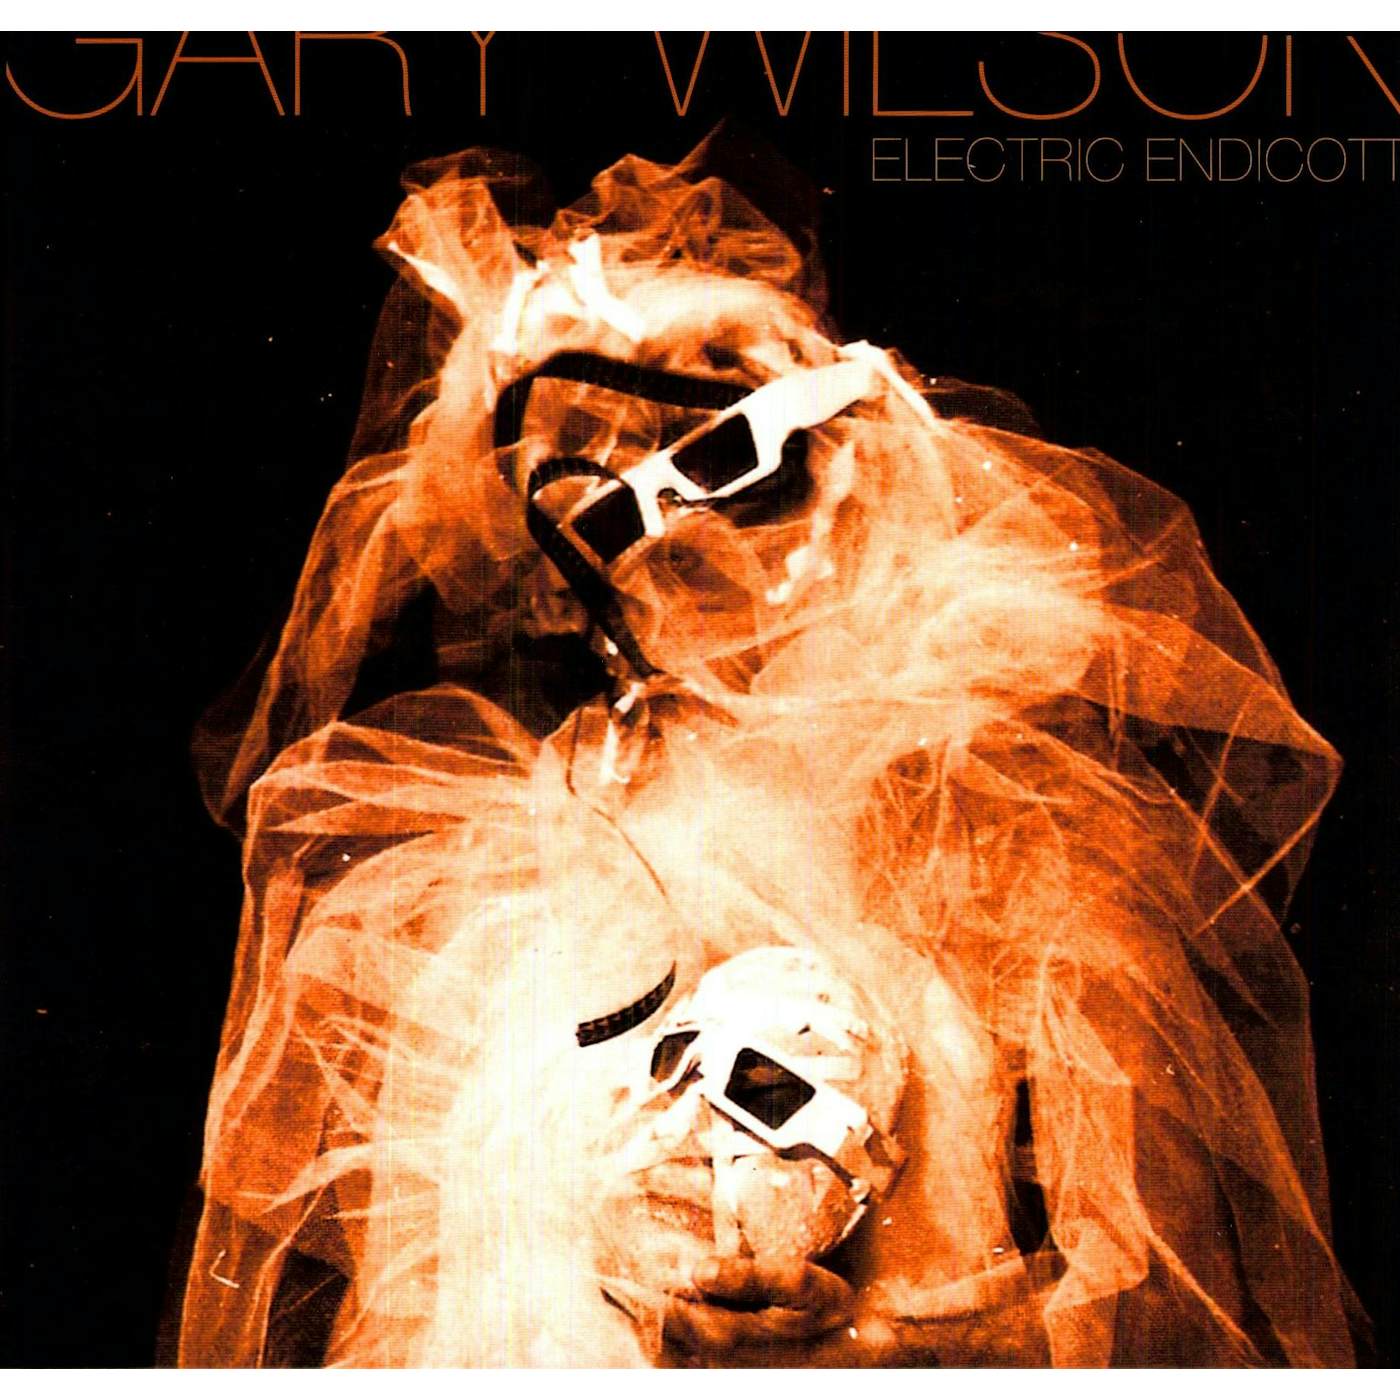 Gary Wilson Electric Endicott Vinyl Record